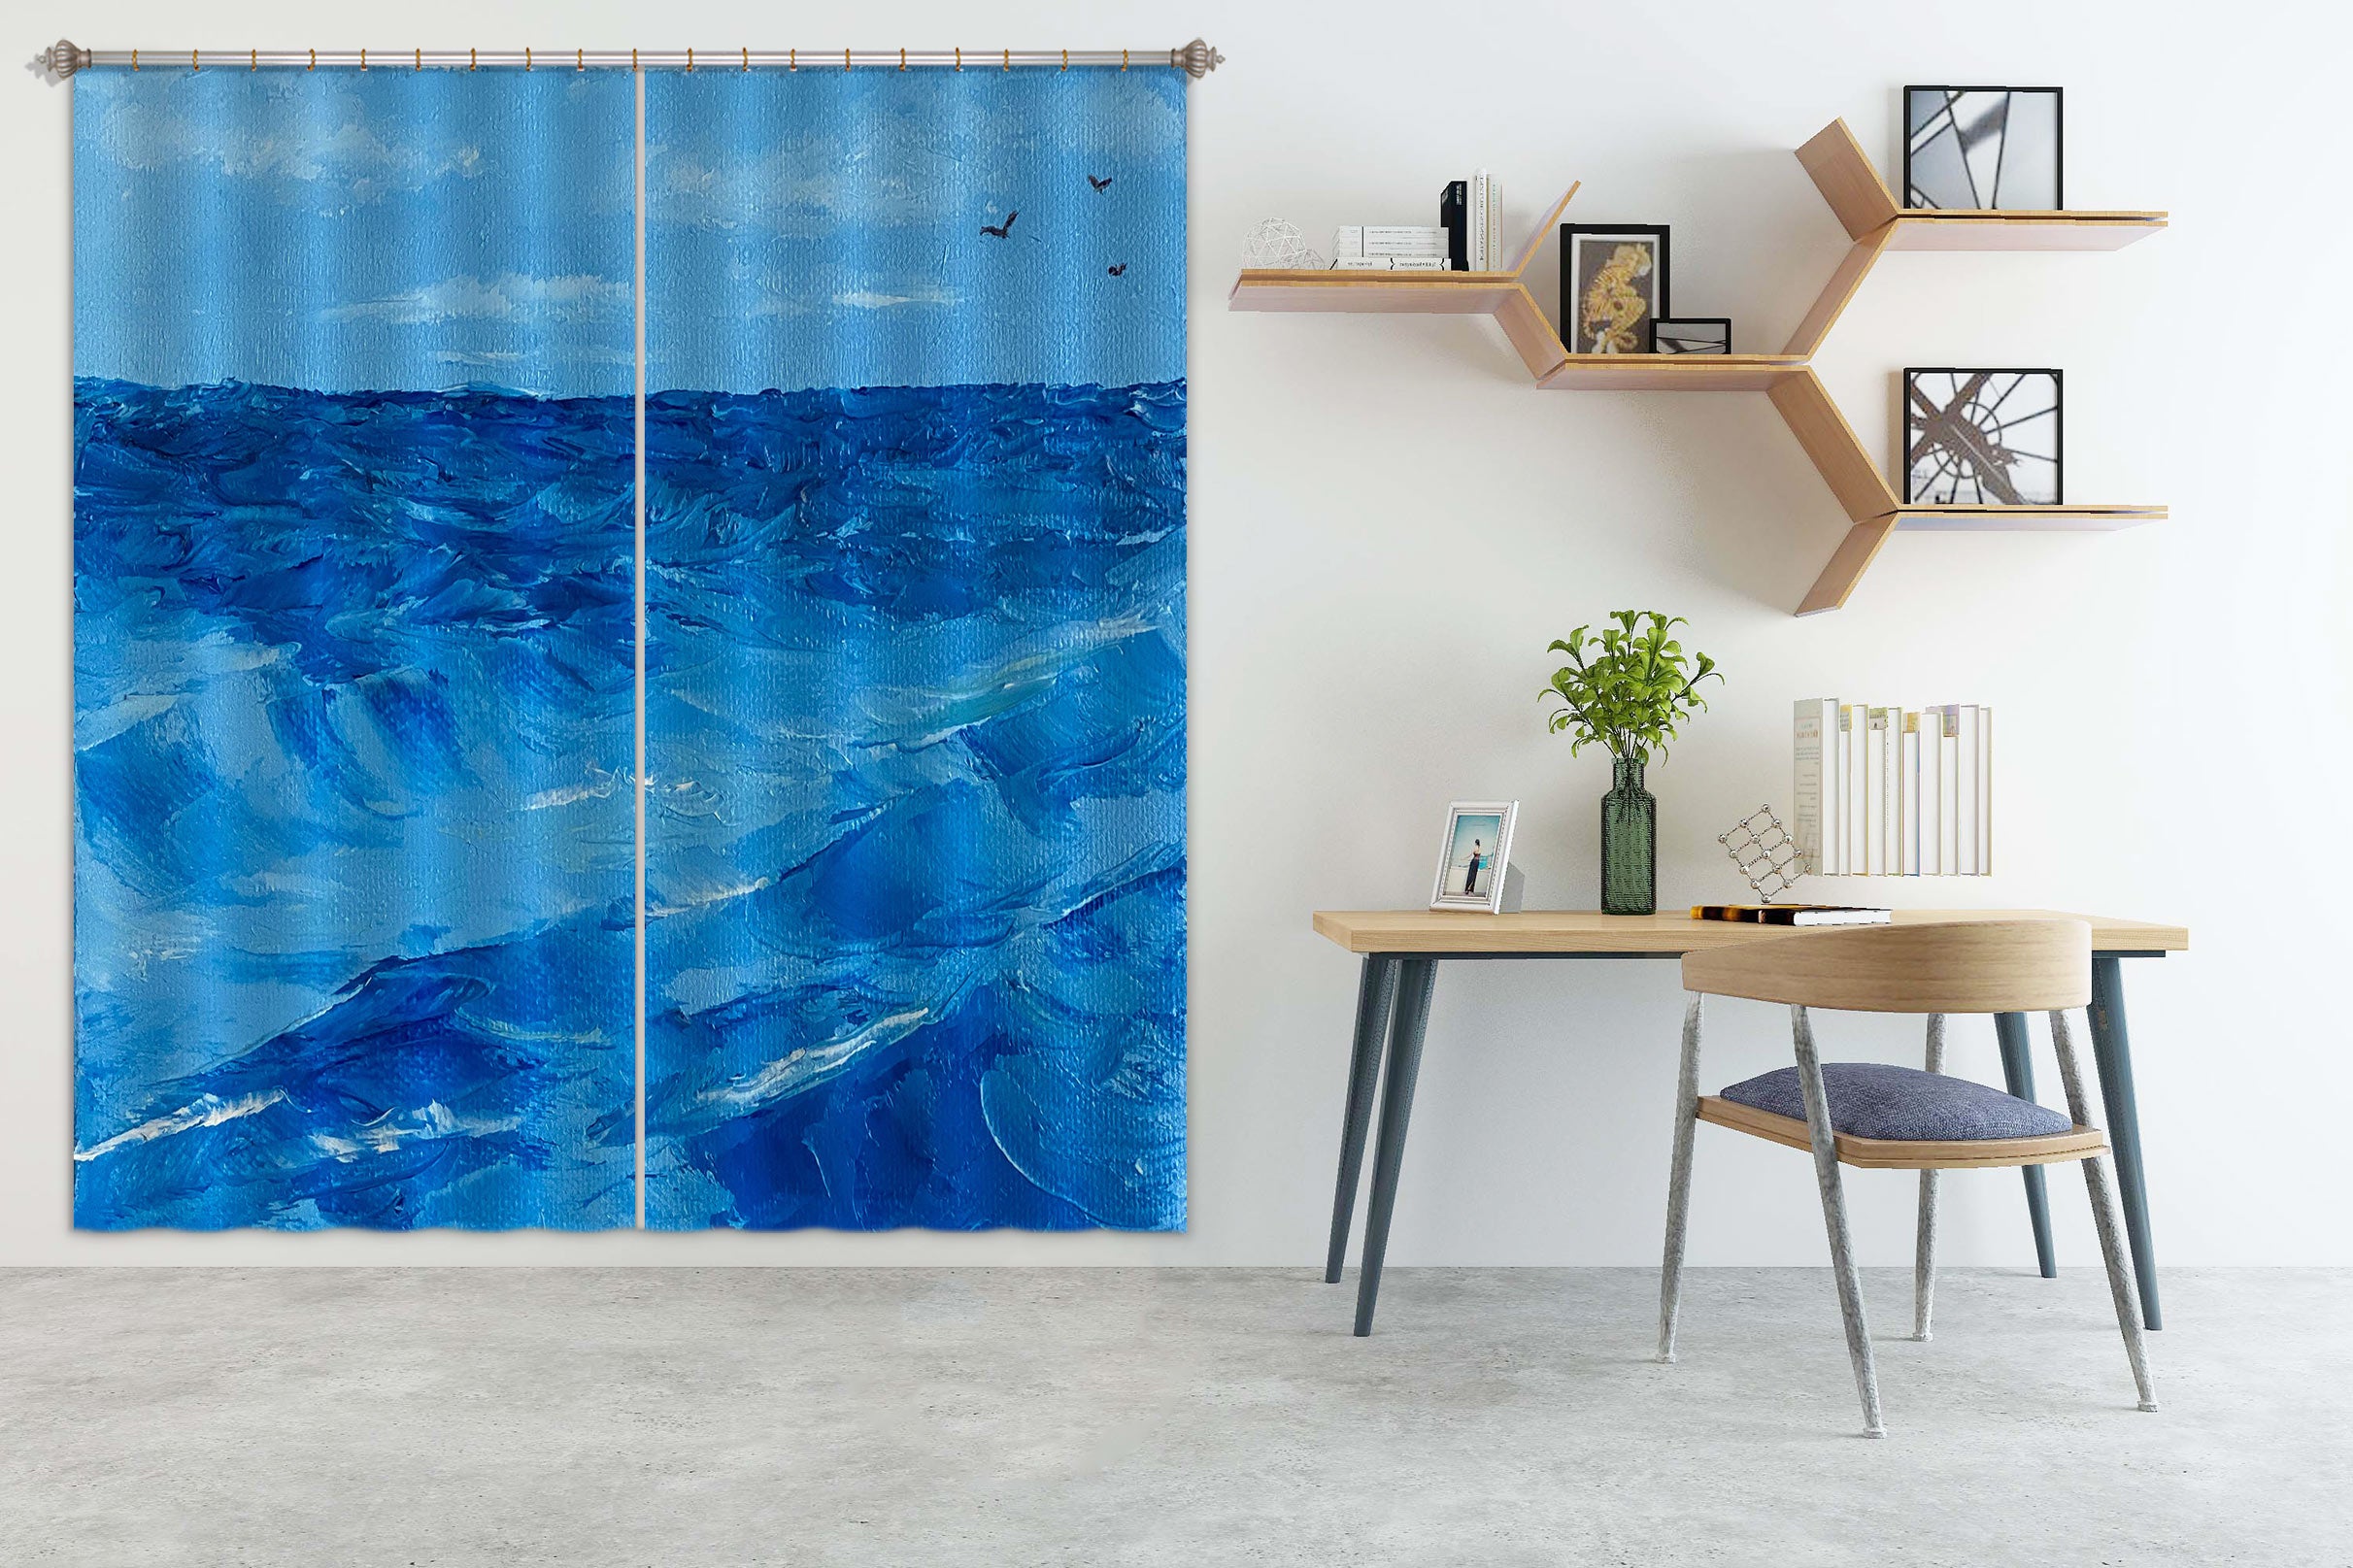 3D Blue Ocean 9774 Marina Zotova Curtain Curtains Drapes